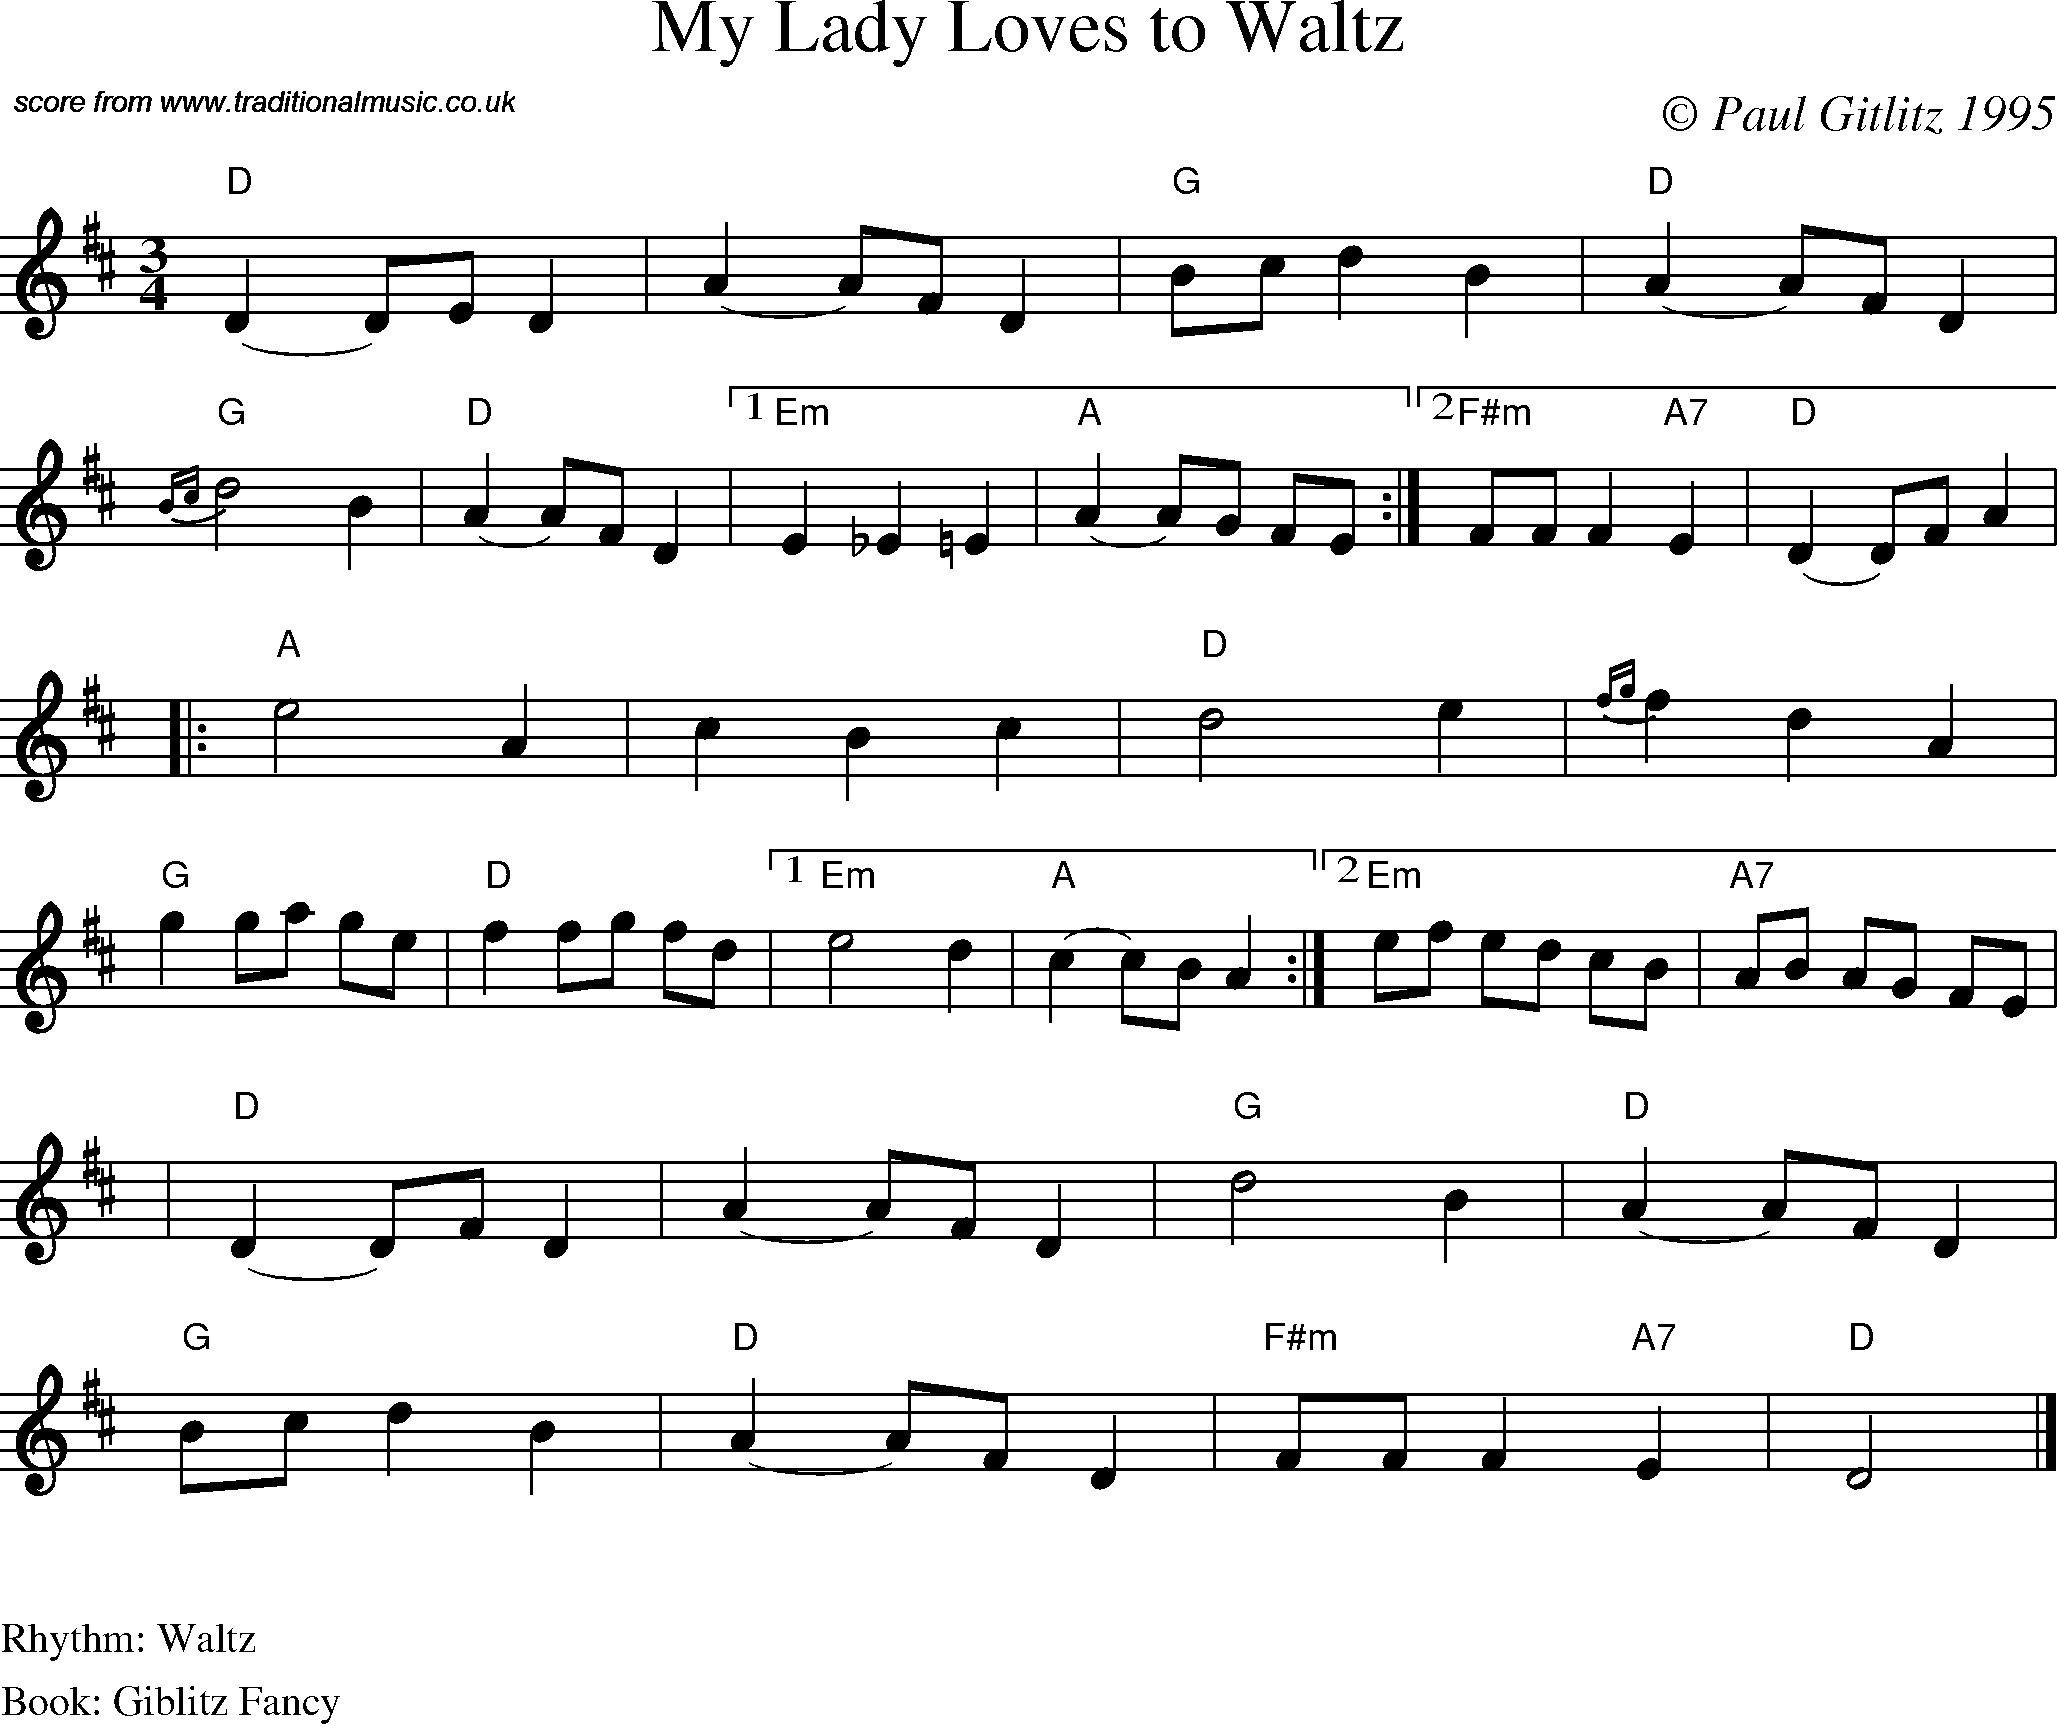 Sheet Music Score for Waltz - My Lady Loves to Waltz